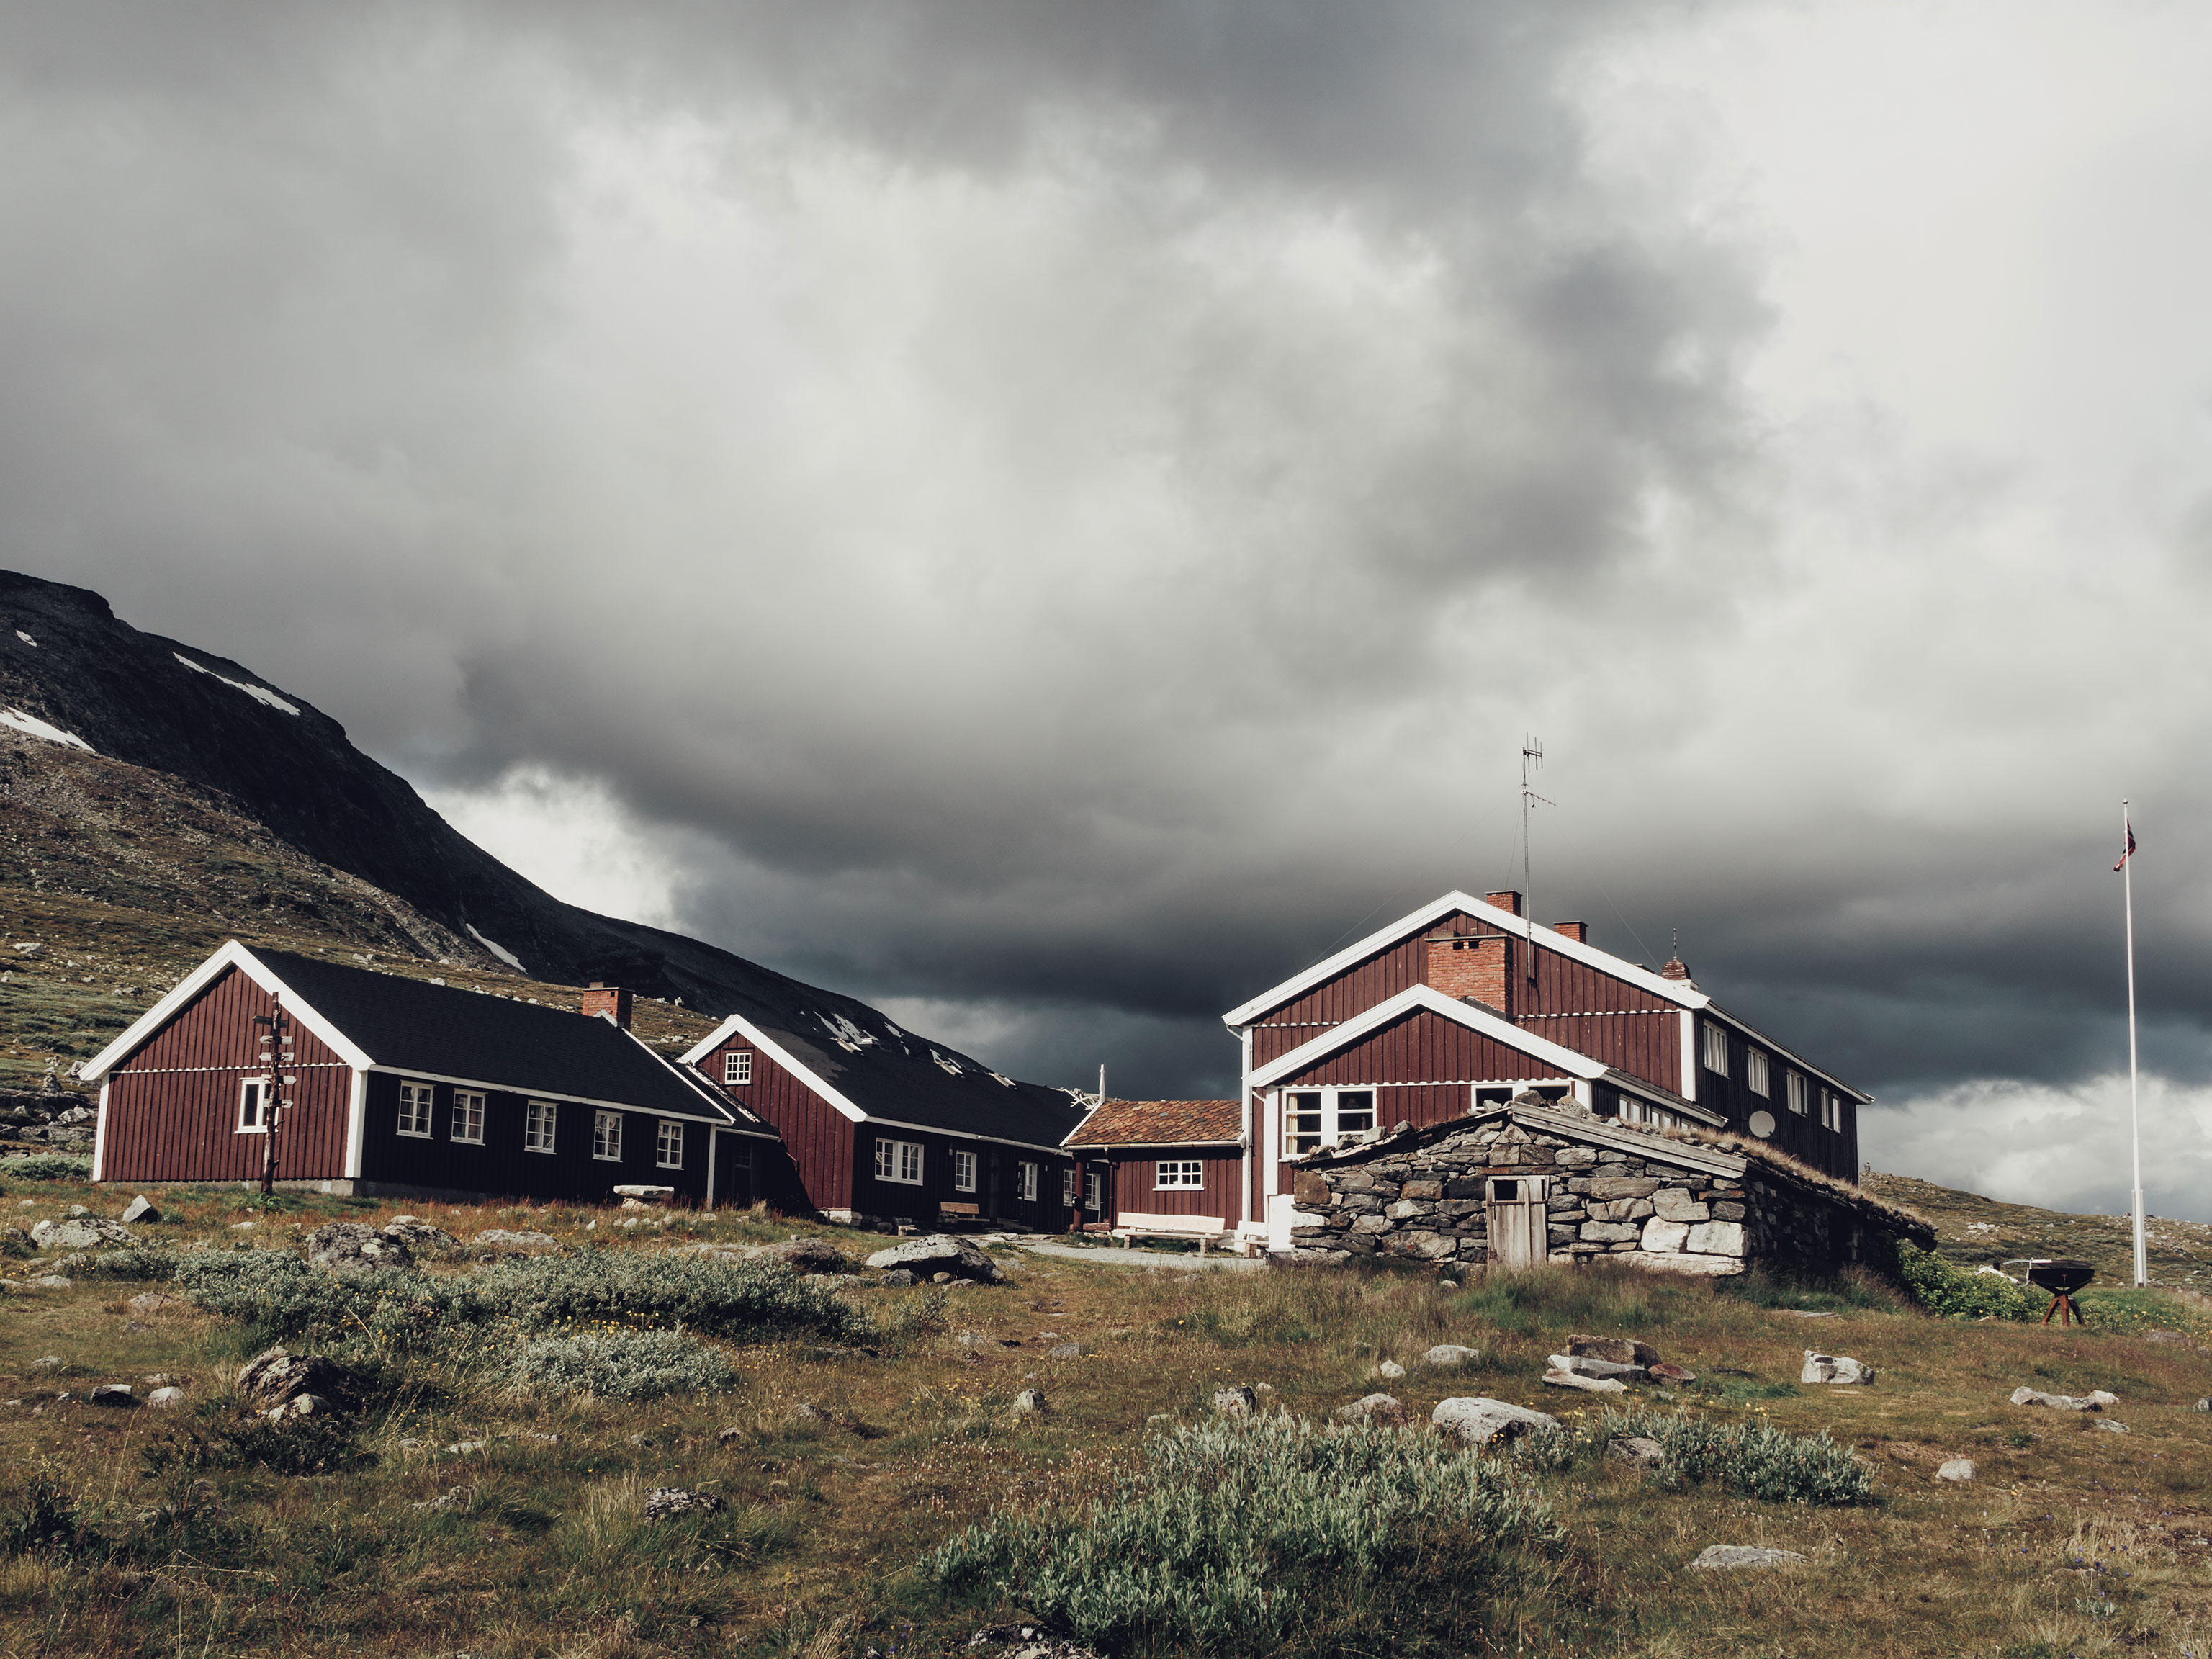 The Glitterheim hut in Norway’s Jotunheimen national park